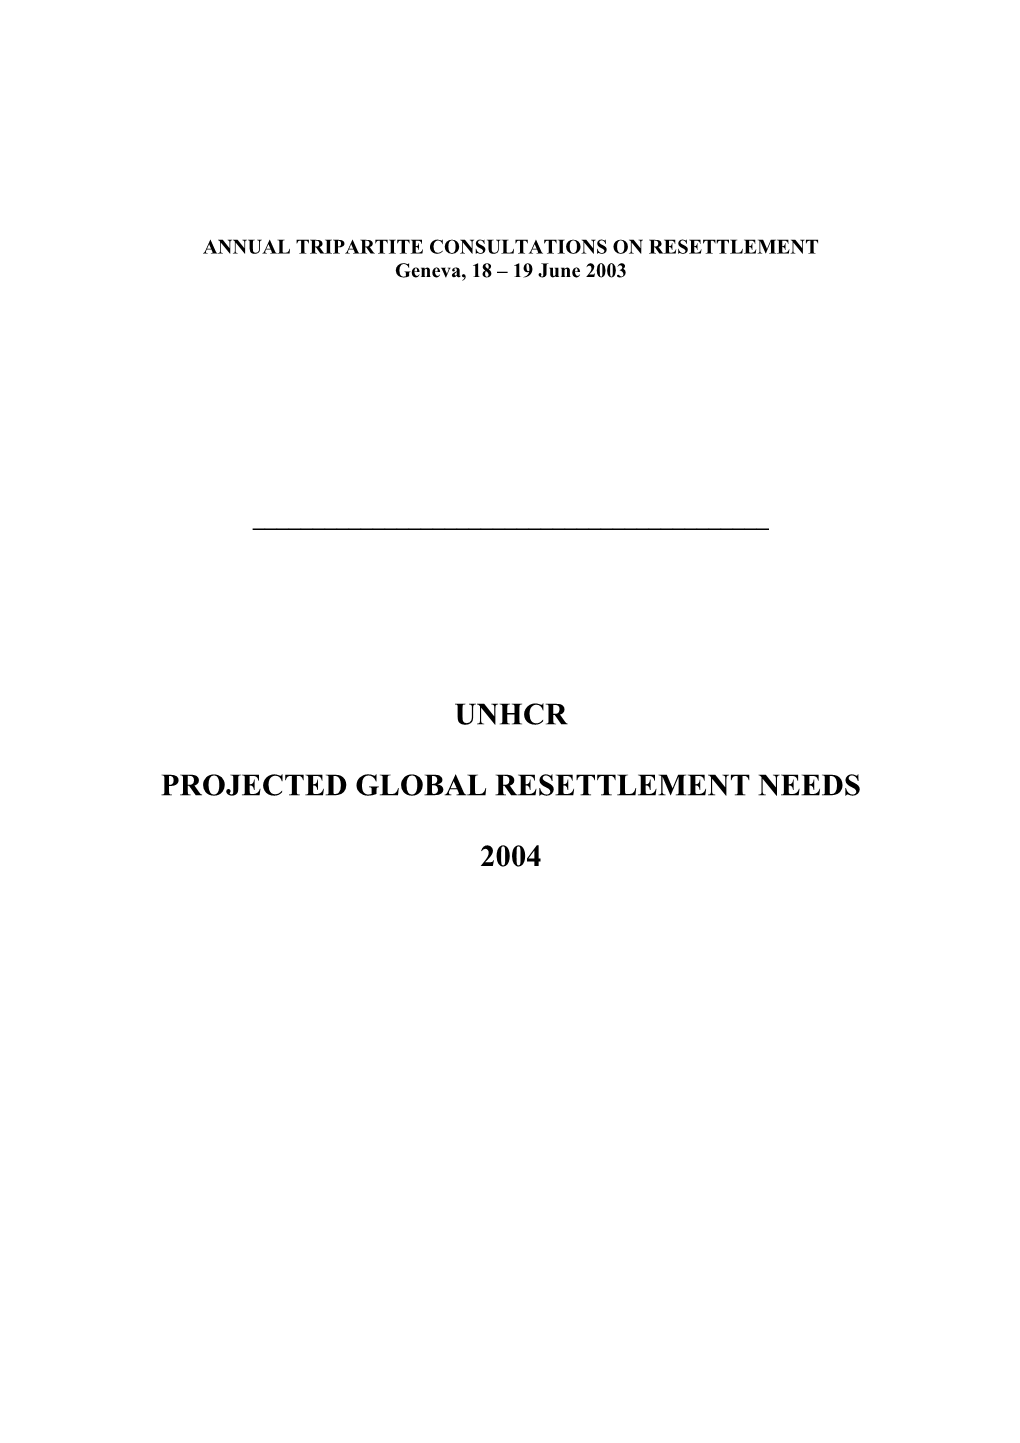 UNHCR Projected Global Resettlement Needs 2004